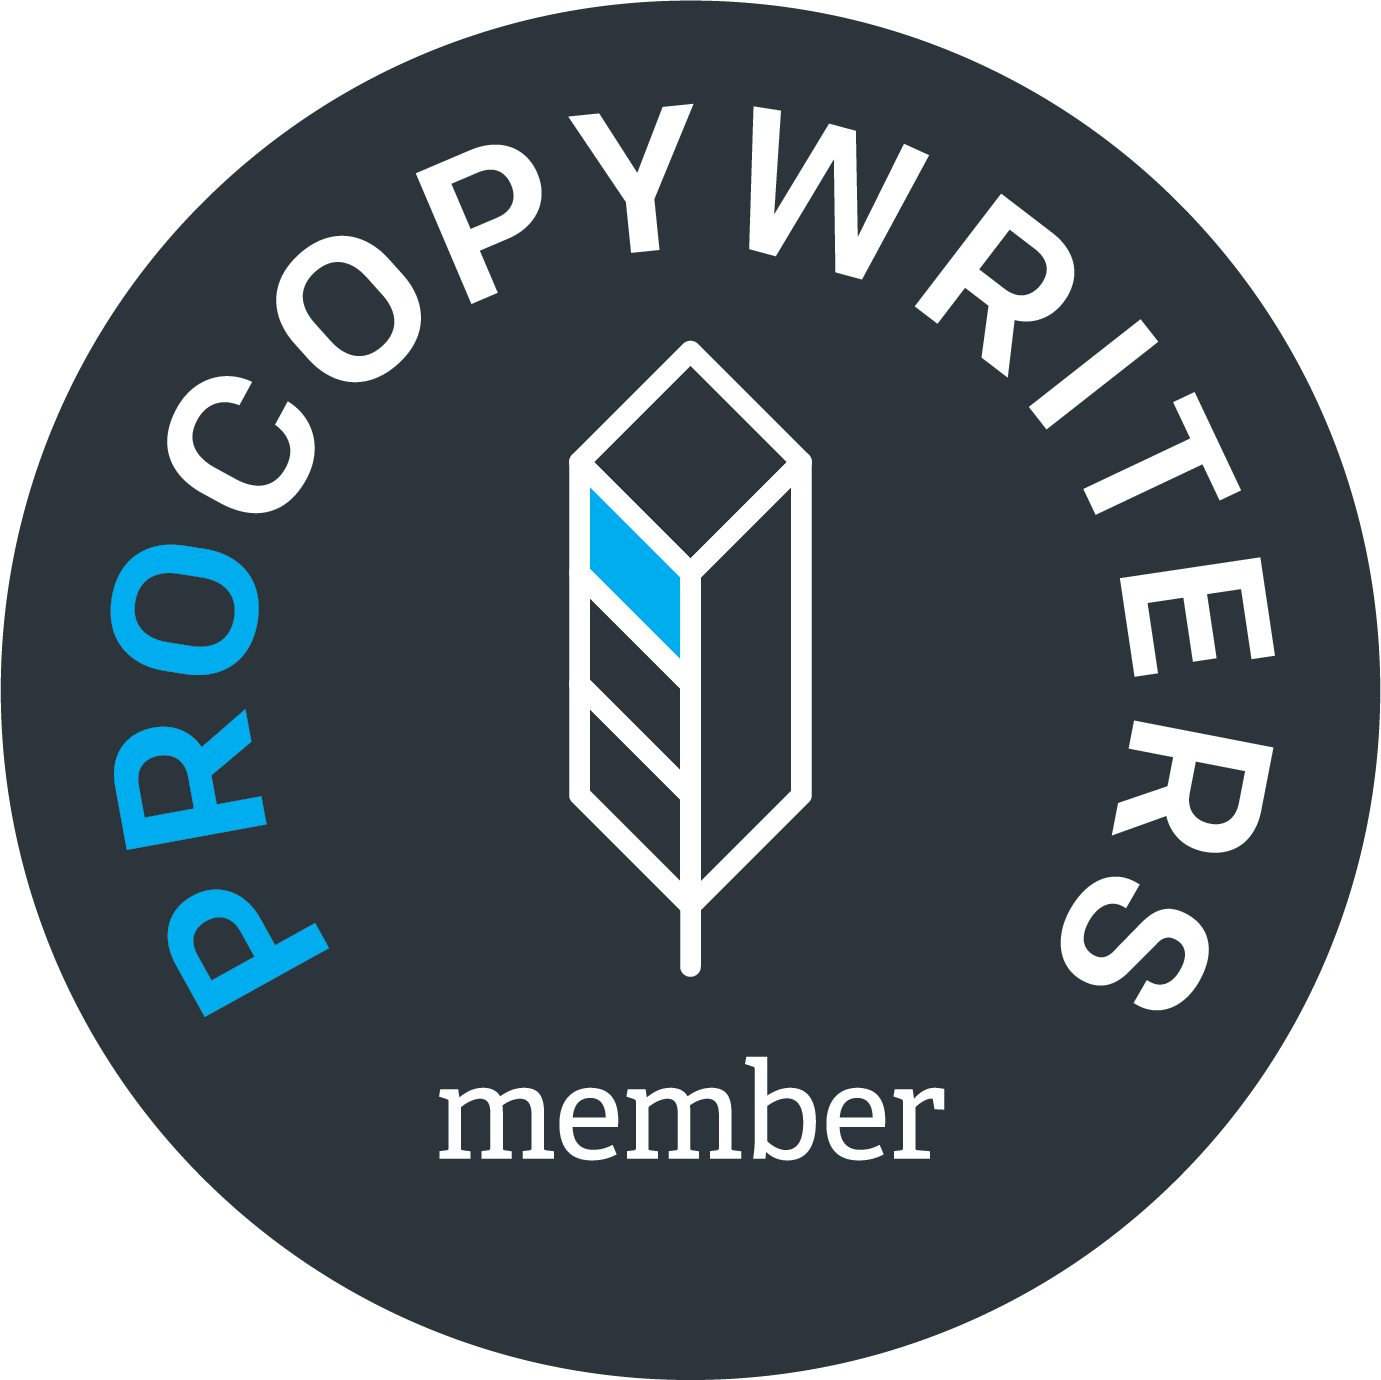 procopywriters_logo_member_dark.png